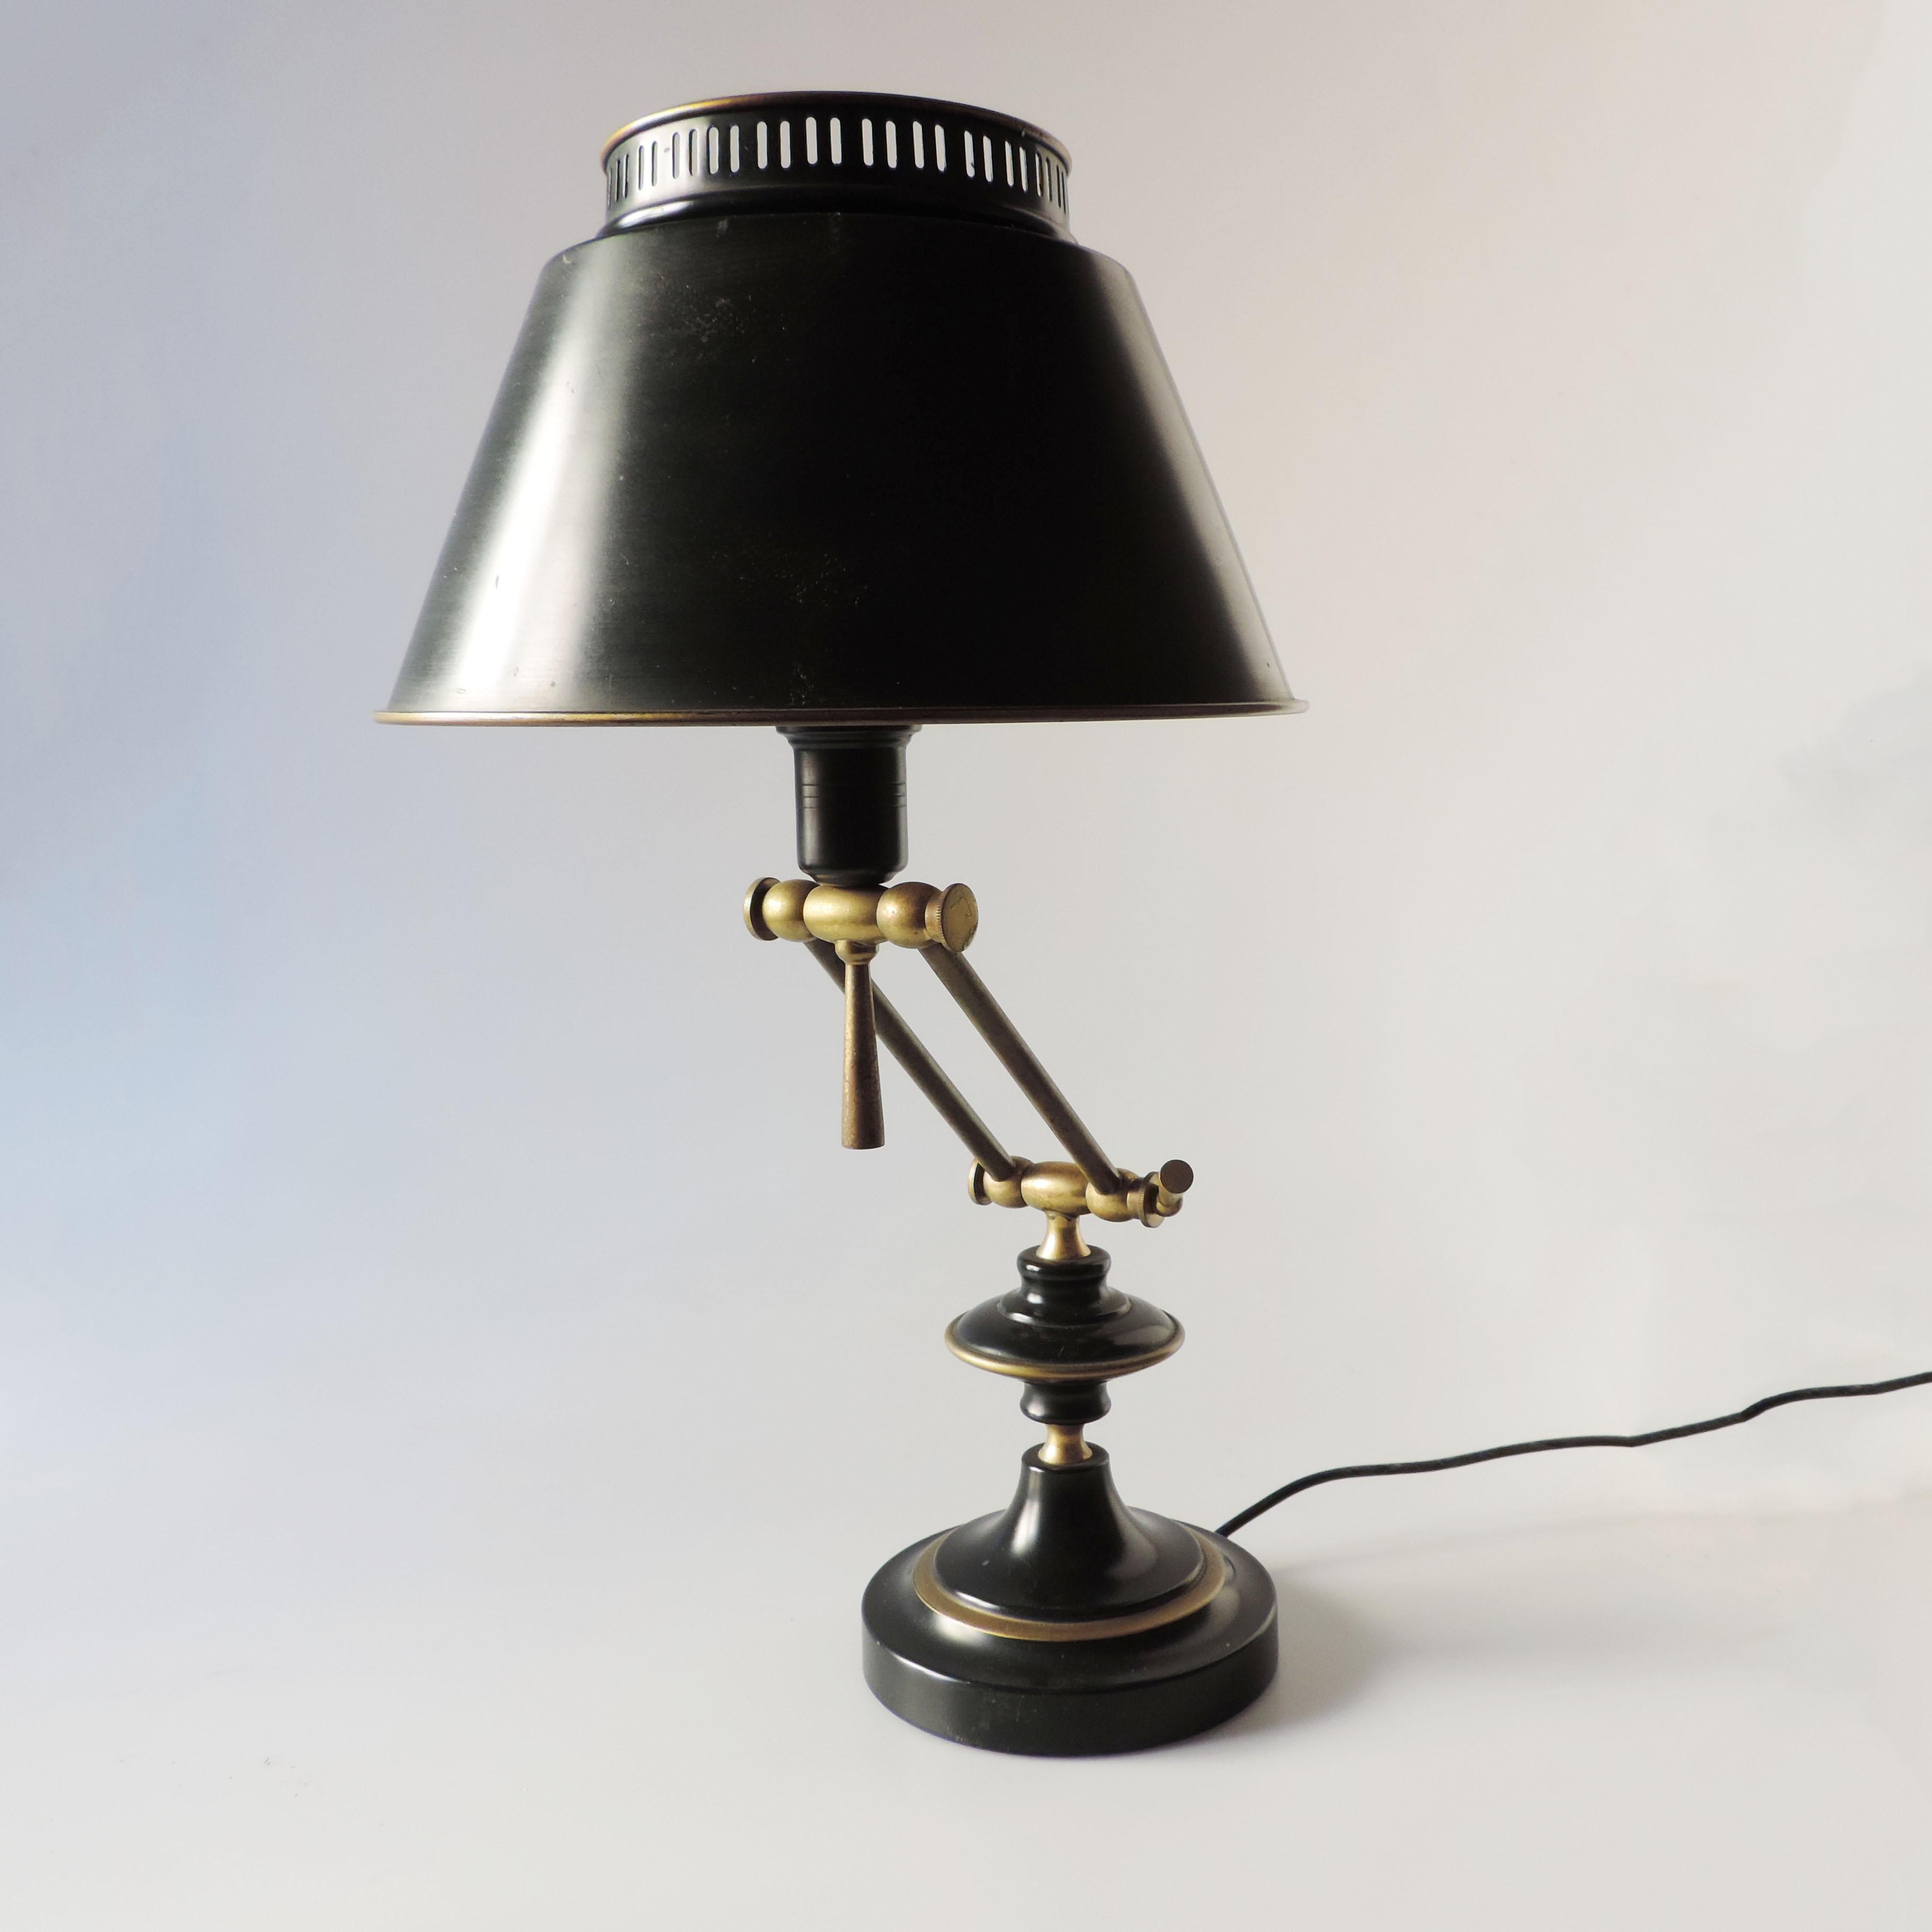 Italian 1950s adjustable table lamp in brass.